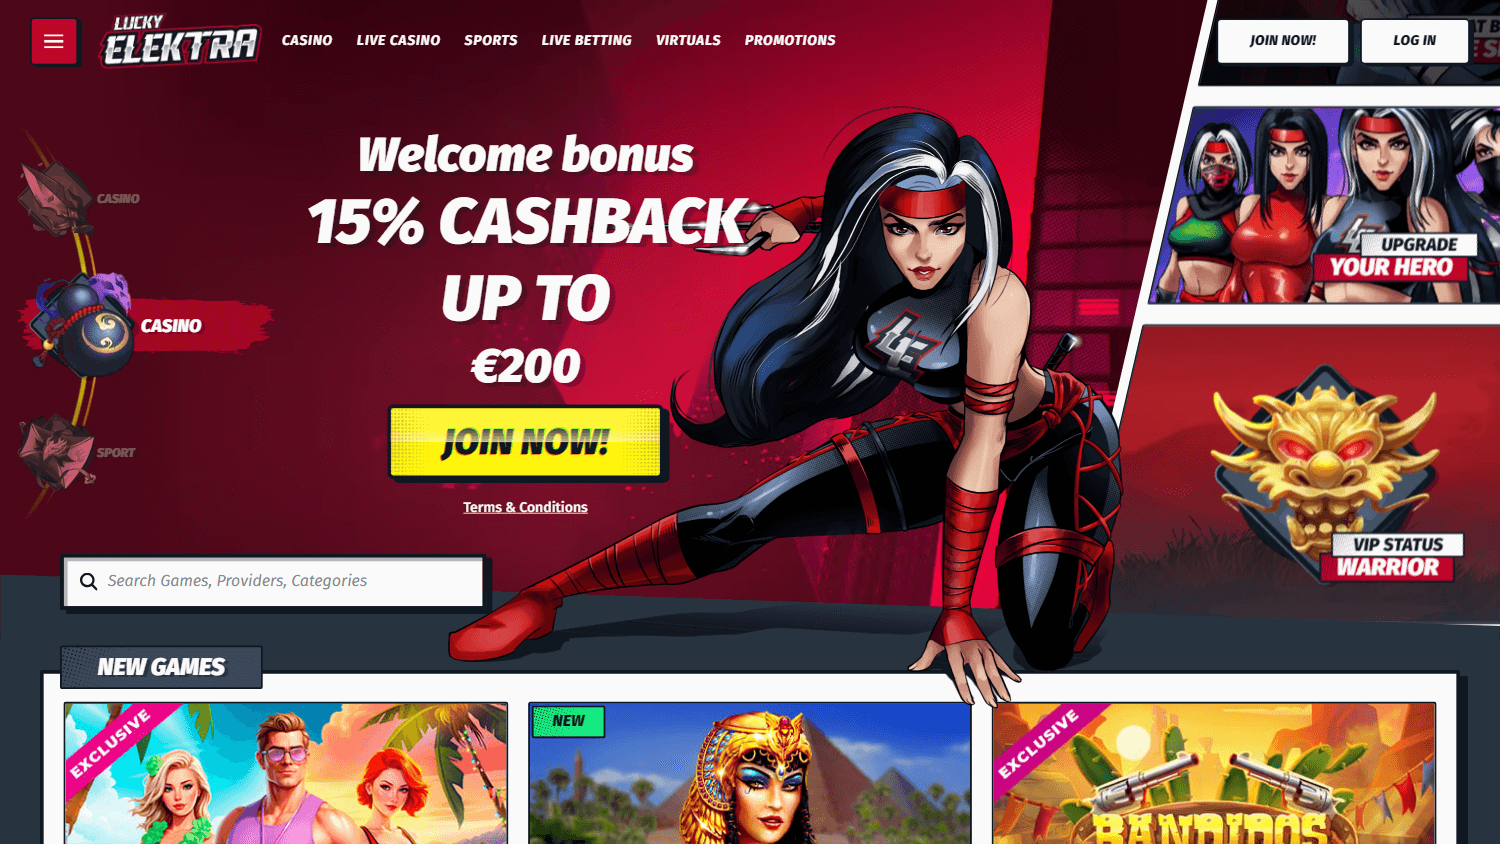 luckyelektra_casino_homepage_desktop